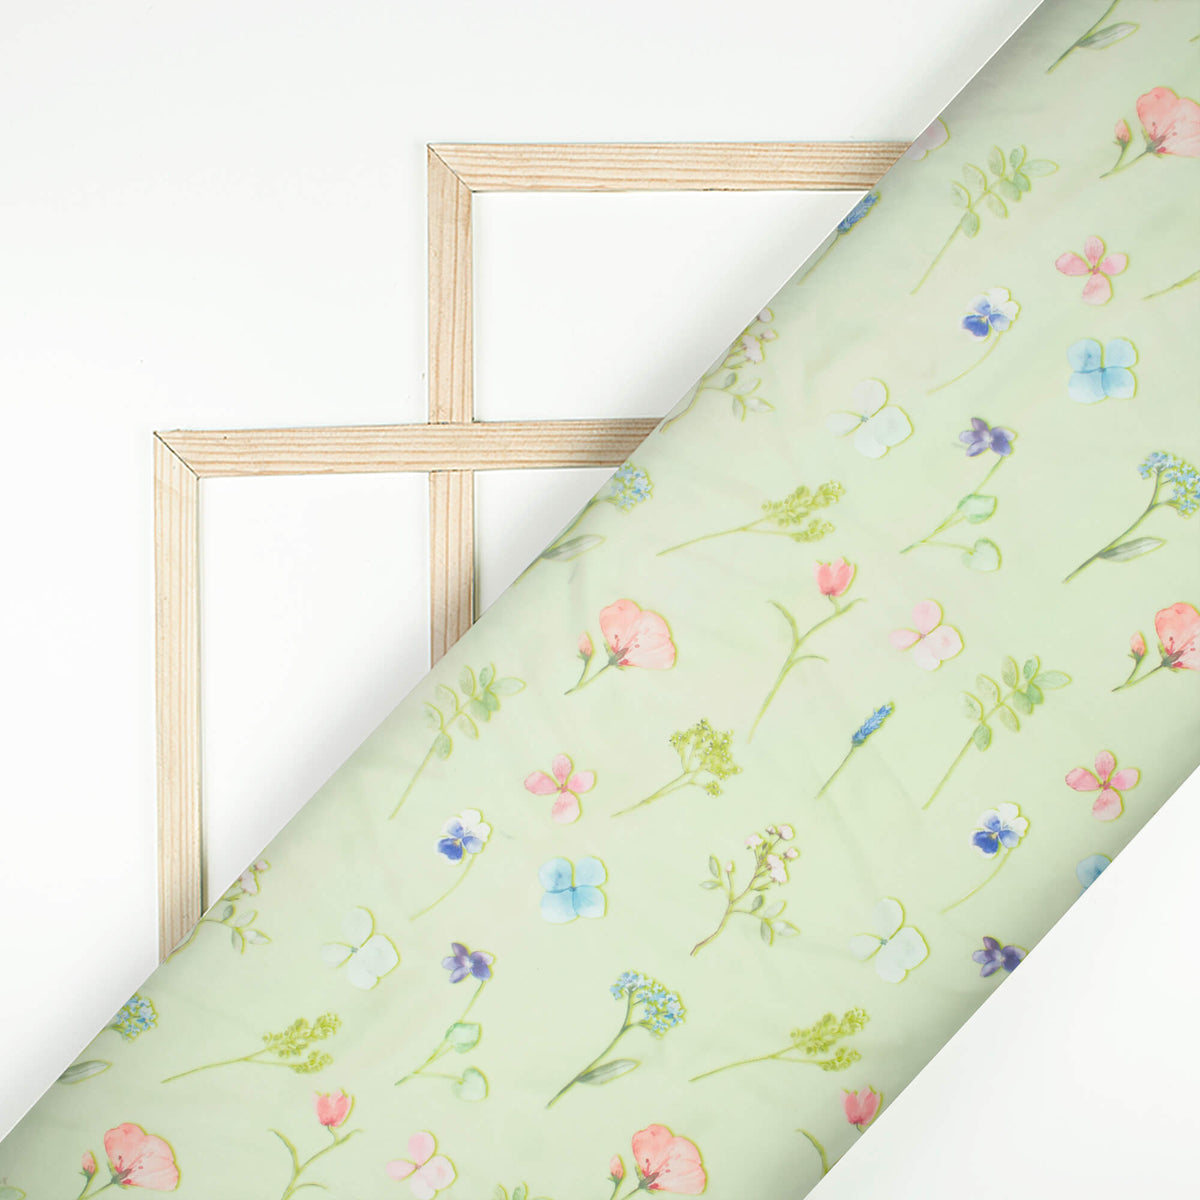 Pastel Green And Pink Floral Pattern Digital Print Organza Satin Fabric